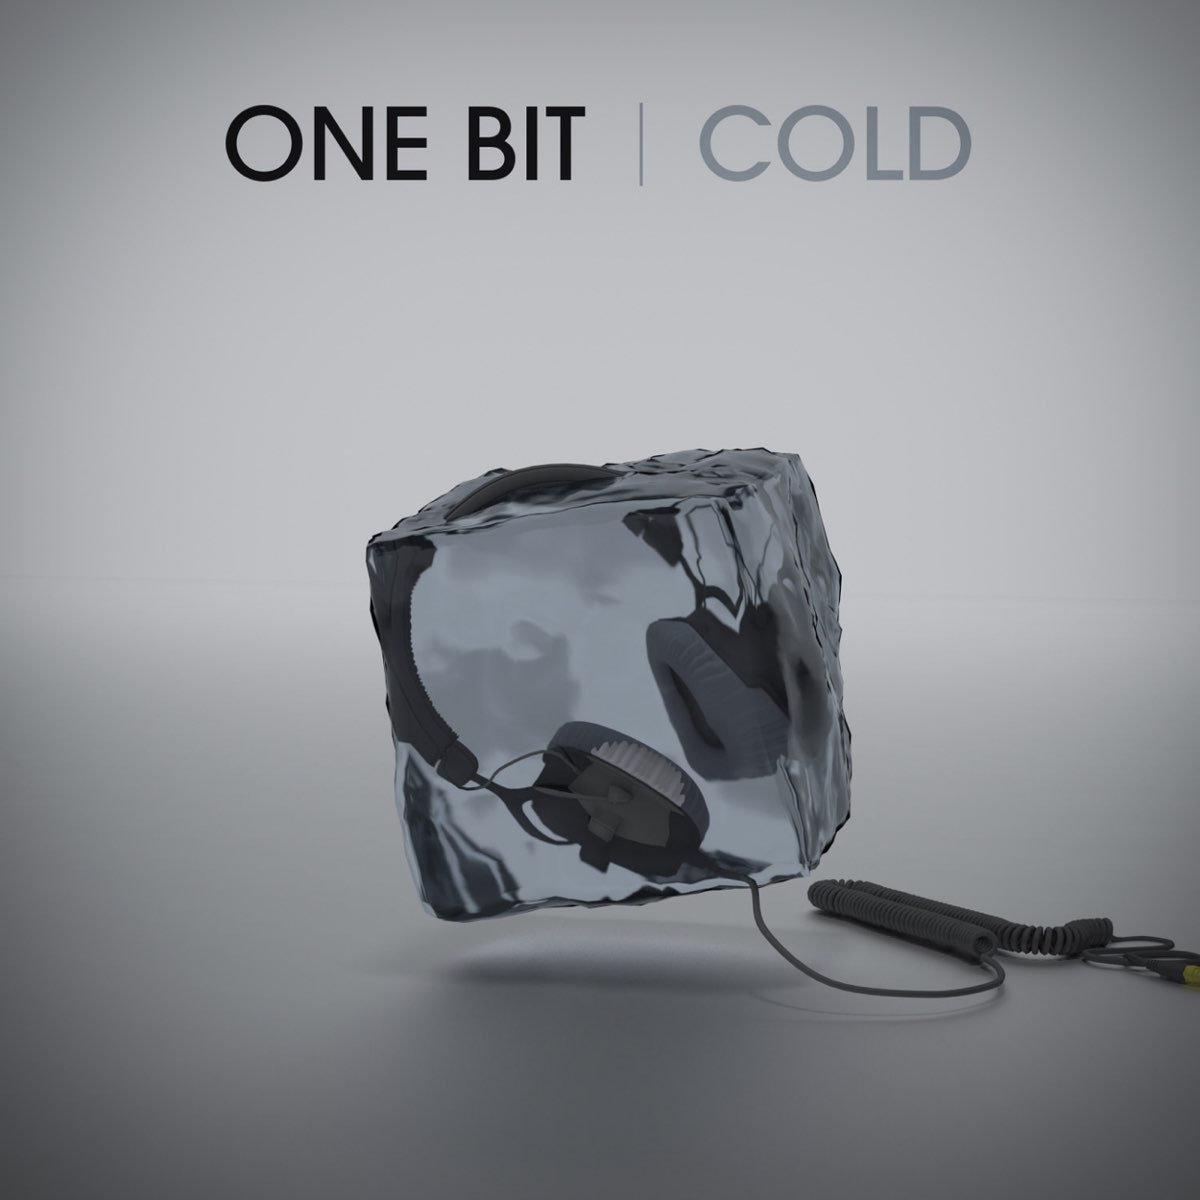 One bit. Cold Loner Tape. Cold Culture - Cold (Single). Картинка холод 1bit. Cold music